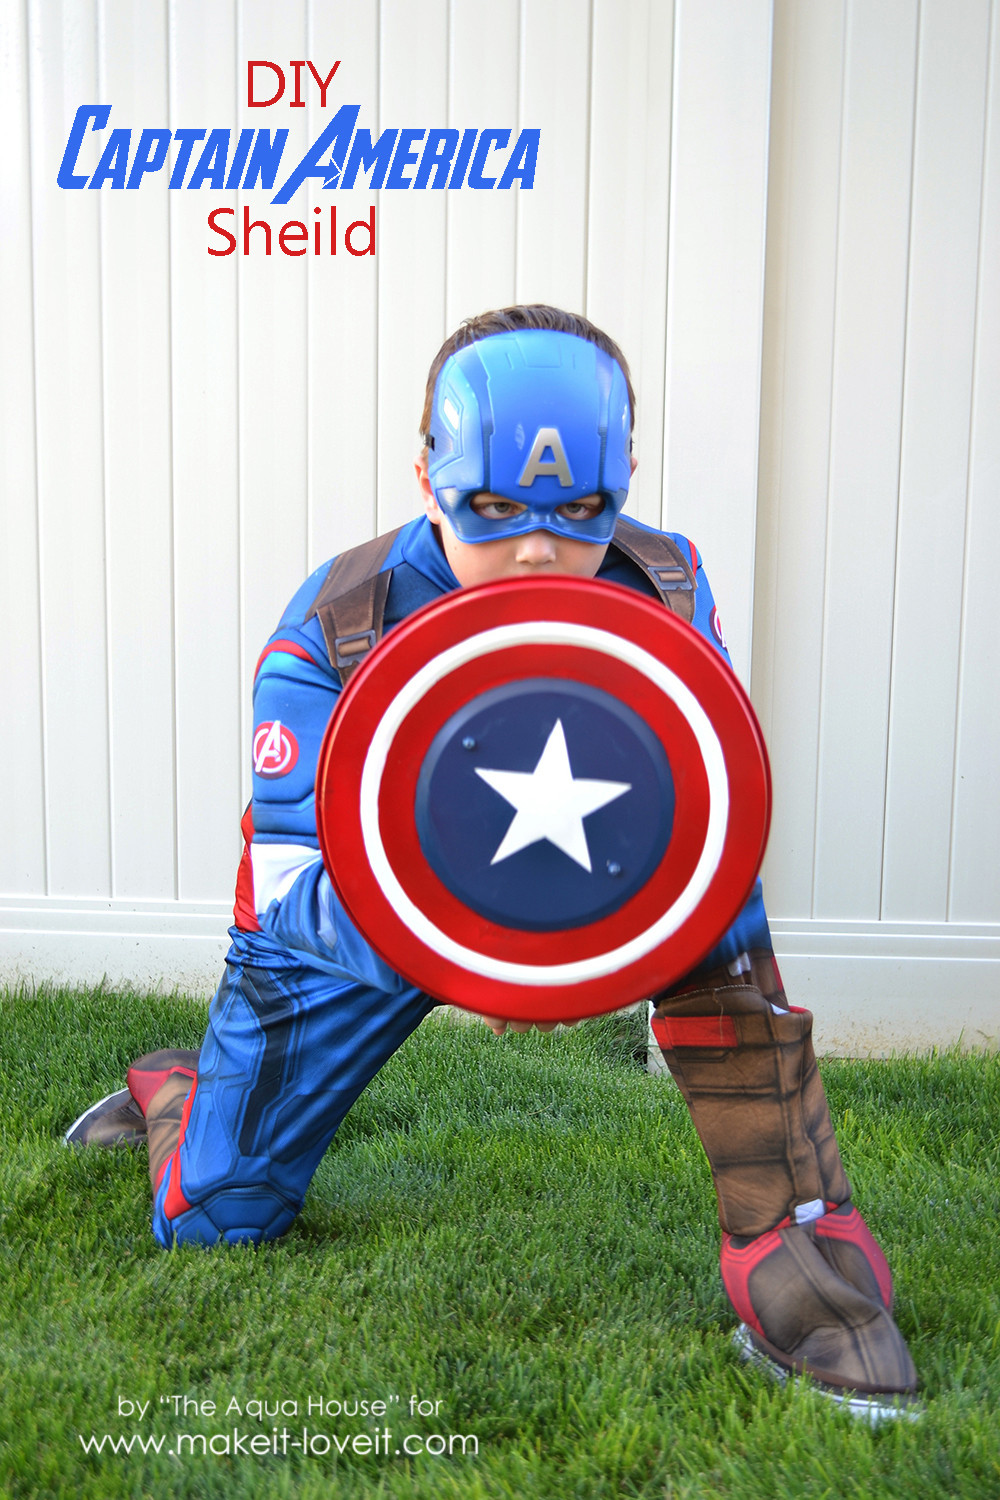 Best ideas about DIY Captain America Shield
. Save or Pin DIY Captain America Shield an IKEA Hack Now.